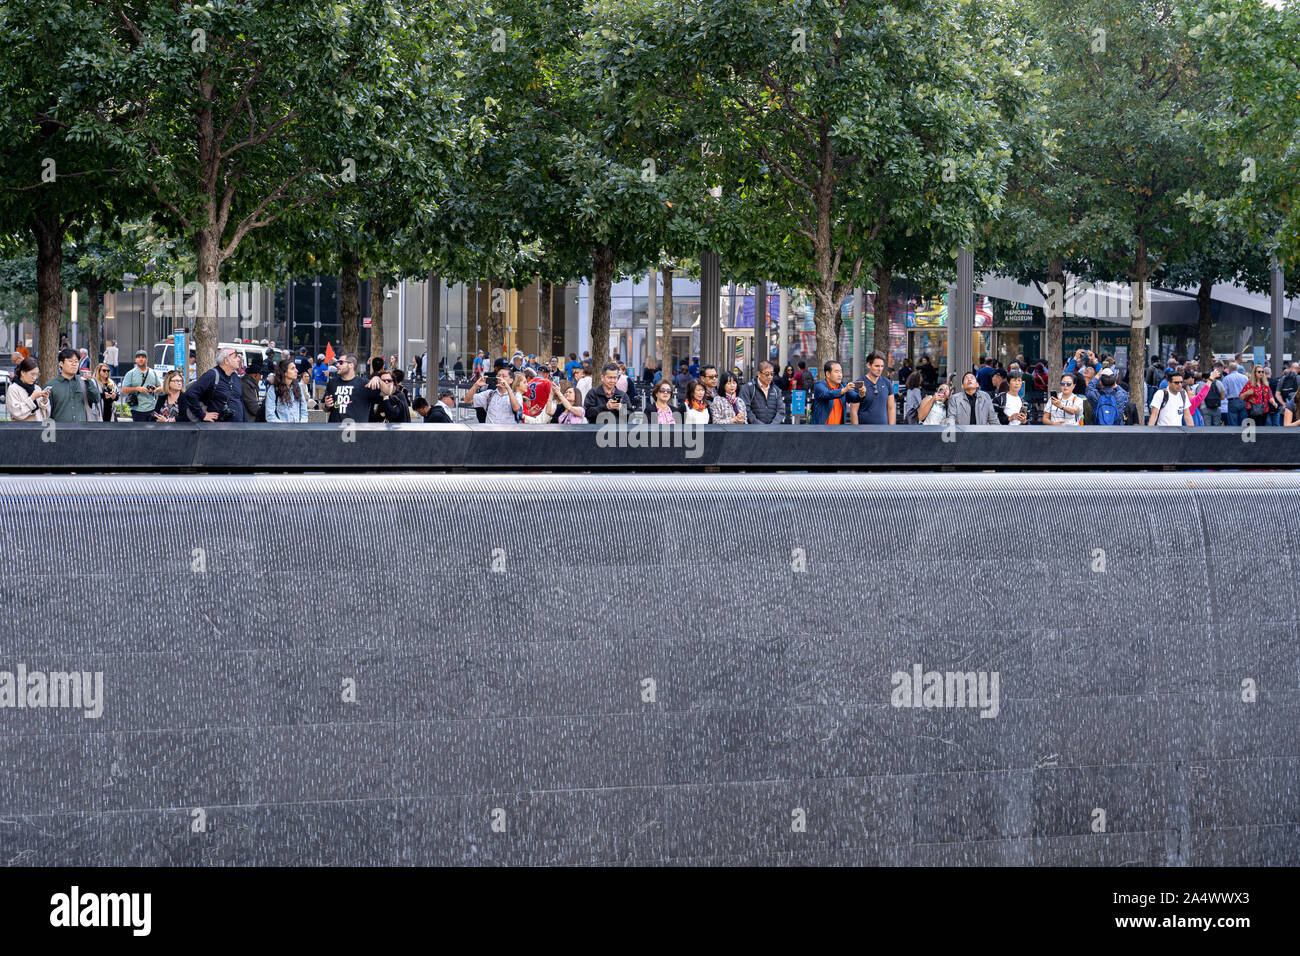 Piscine Memorial à Ground Zero à Manhattan, NYC Banque D'Images